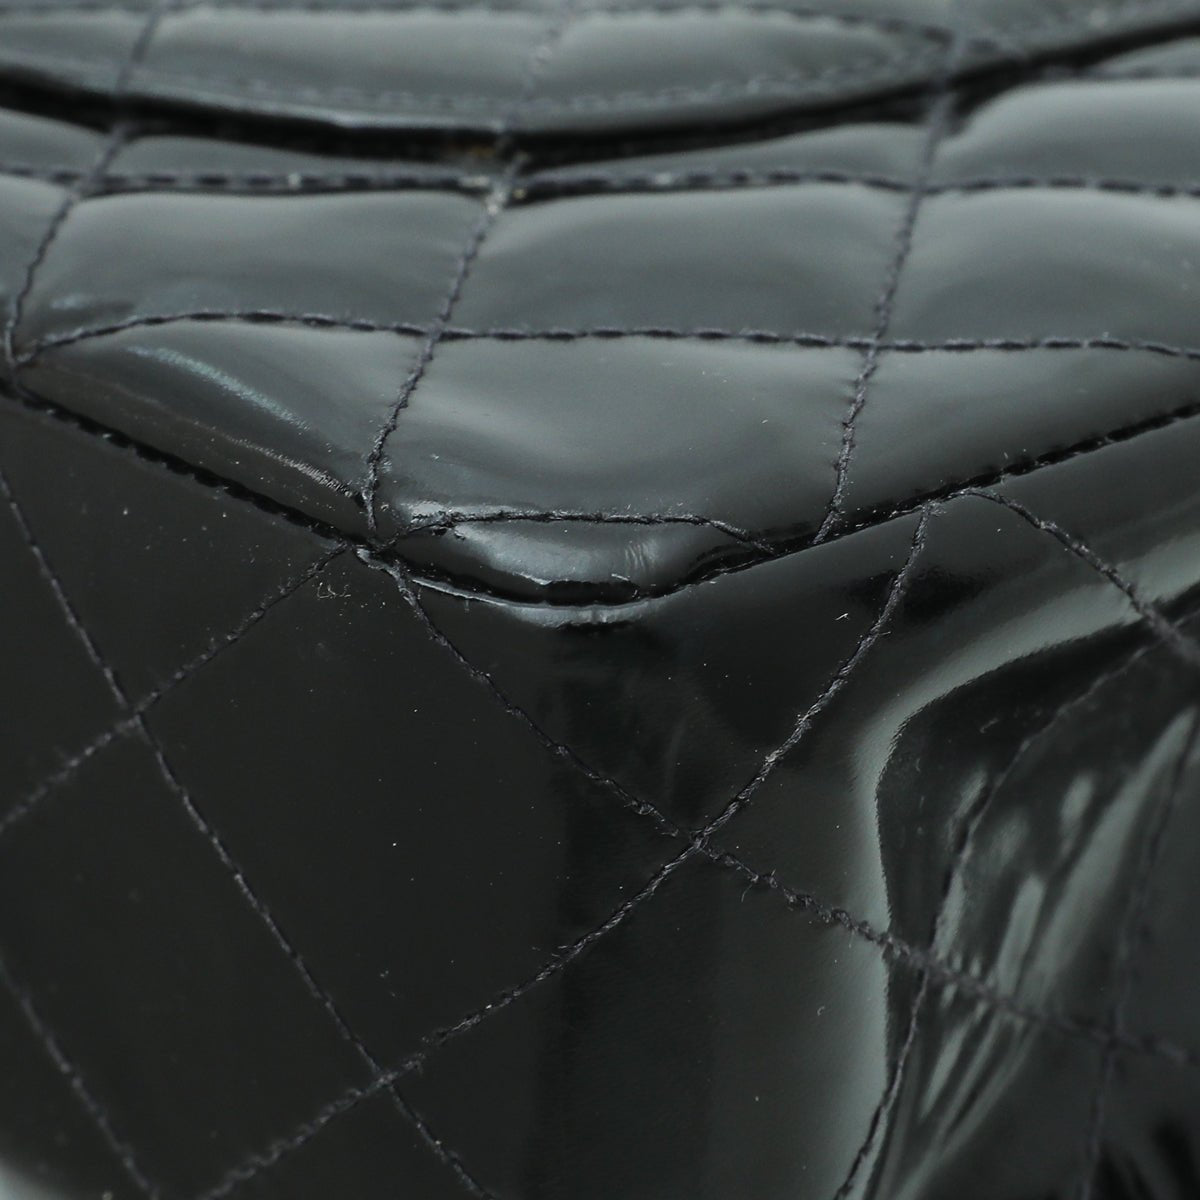 Chanel - Chanel Black CC Classic Double Flap Medium Bag | The Closet